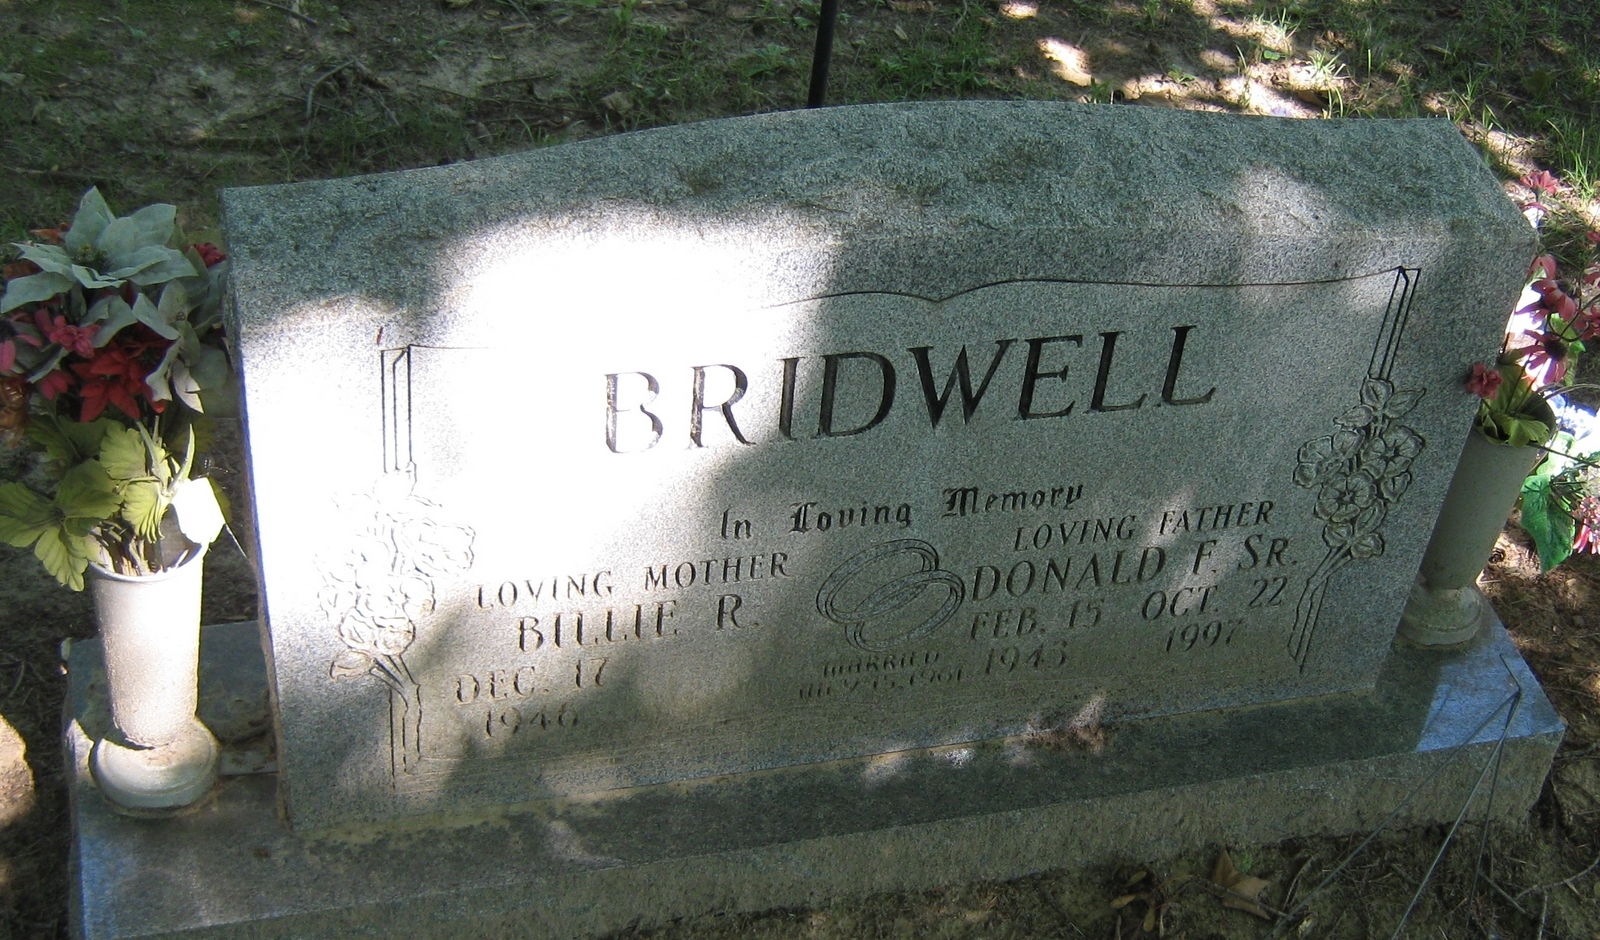 Billie R Bridwell